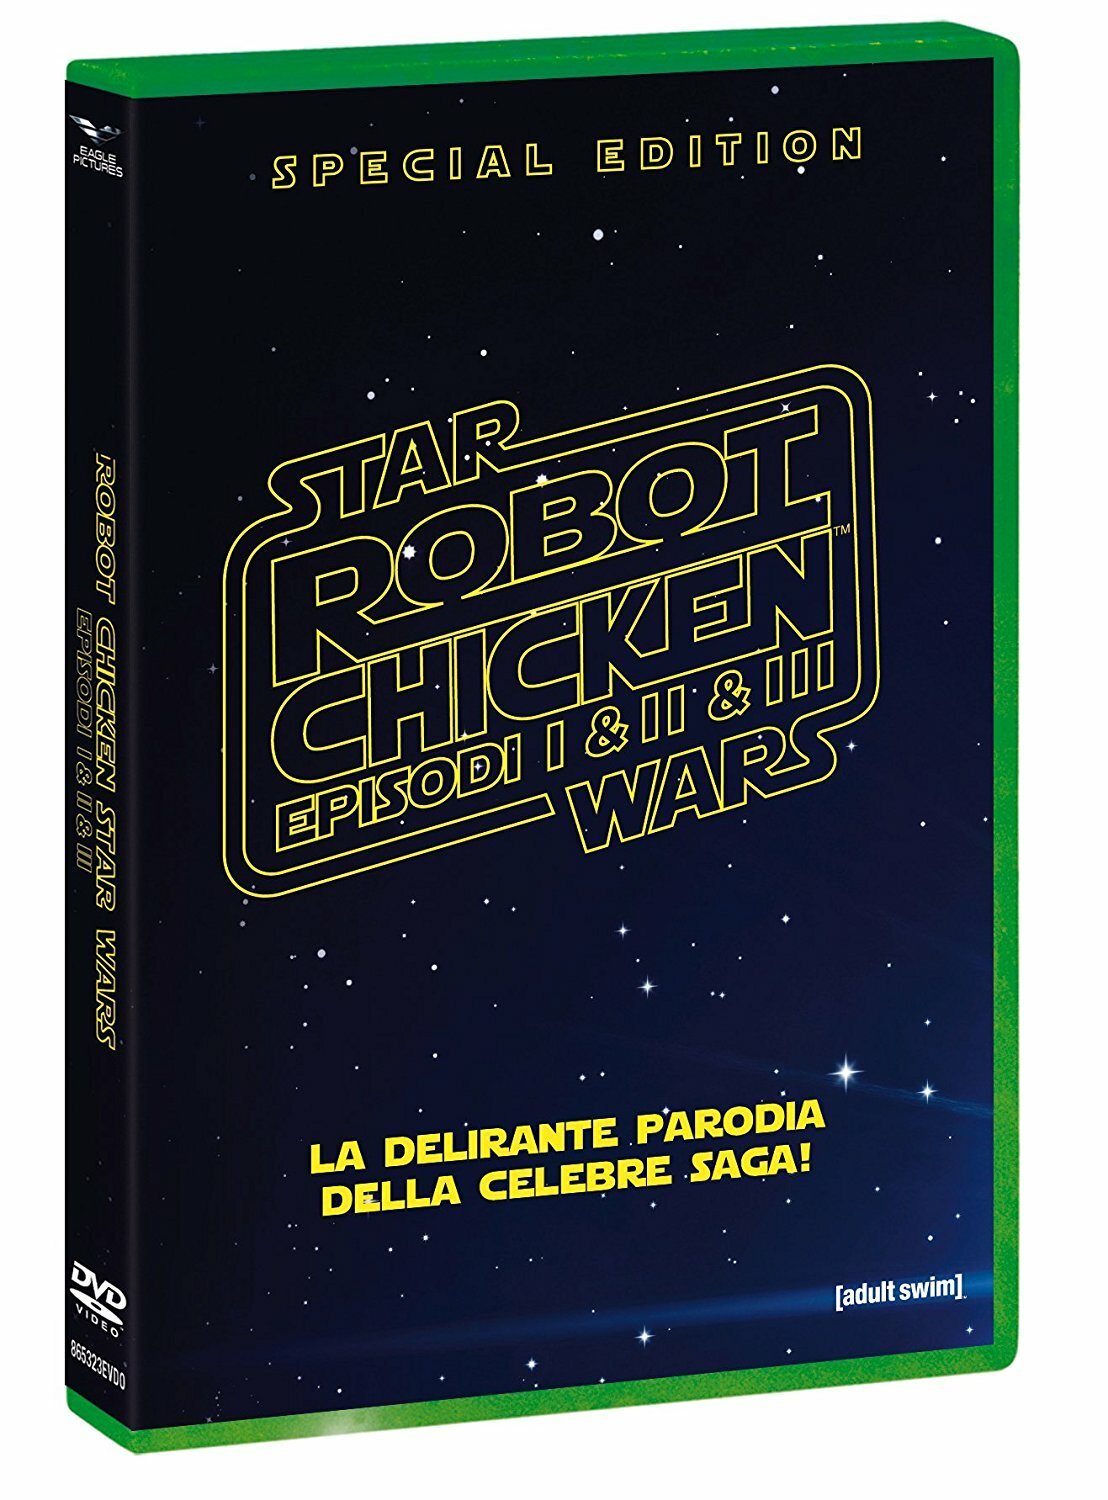 Il DVD di Robot Chicken Star Wars - Special Edition 